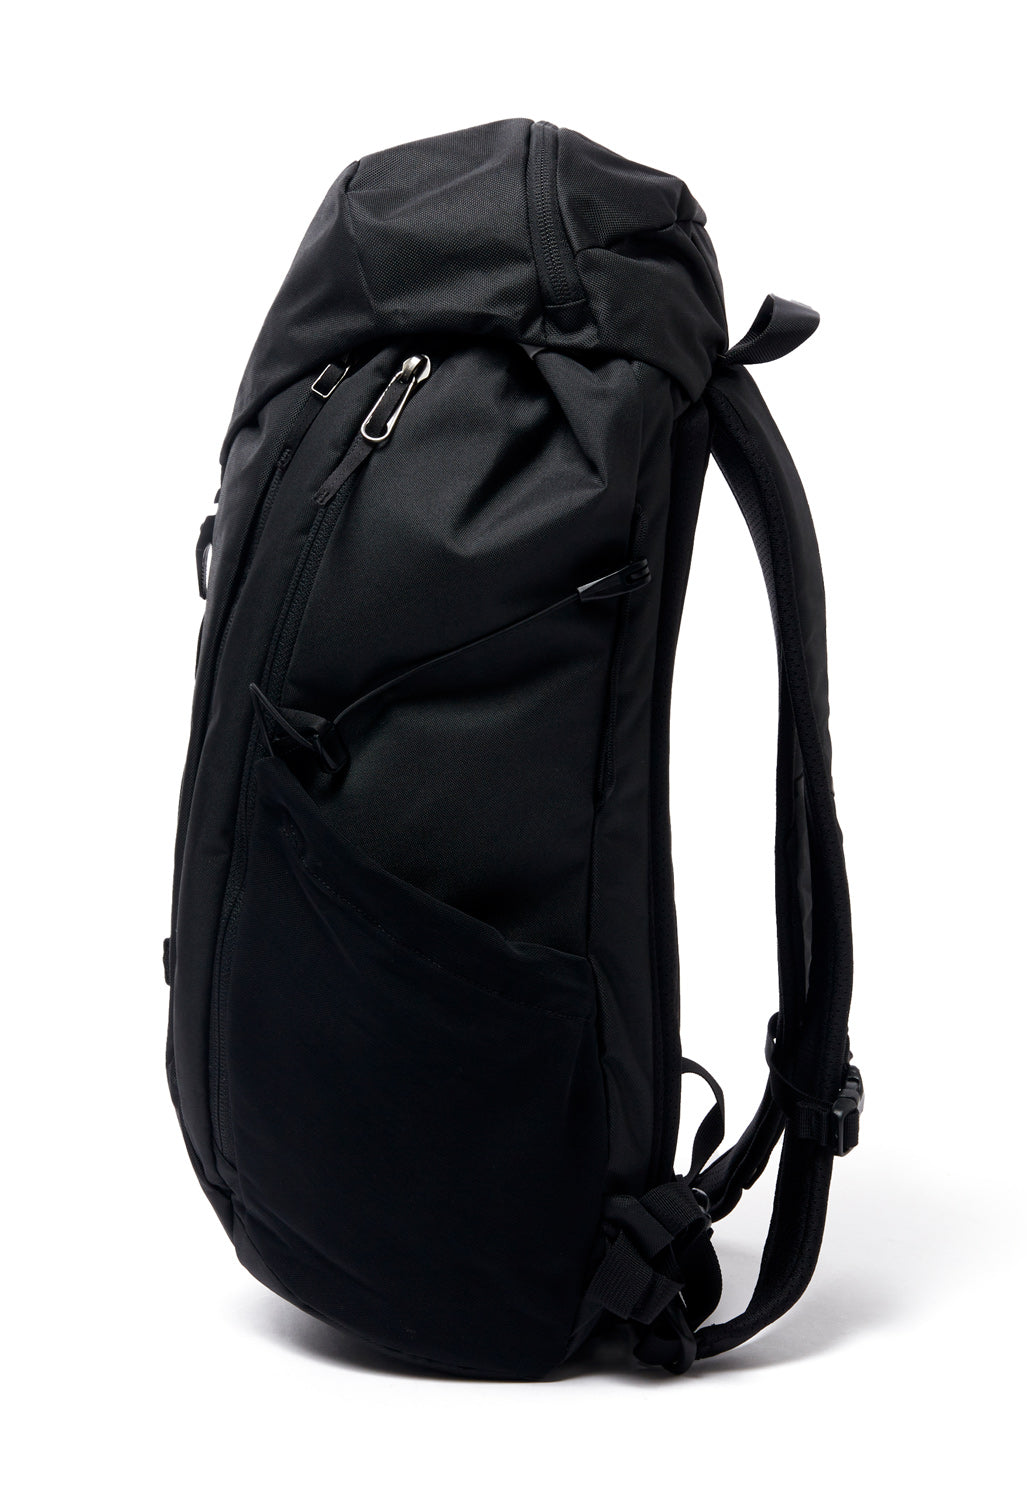 Arc'teryx Mantis 20 Backpack, Black Sapphire, Size Os